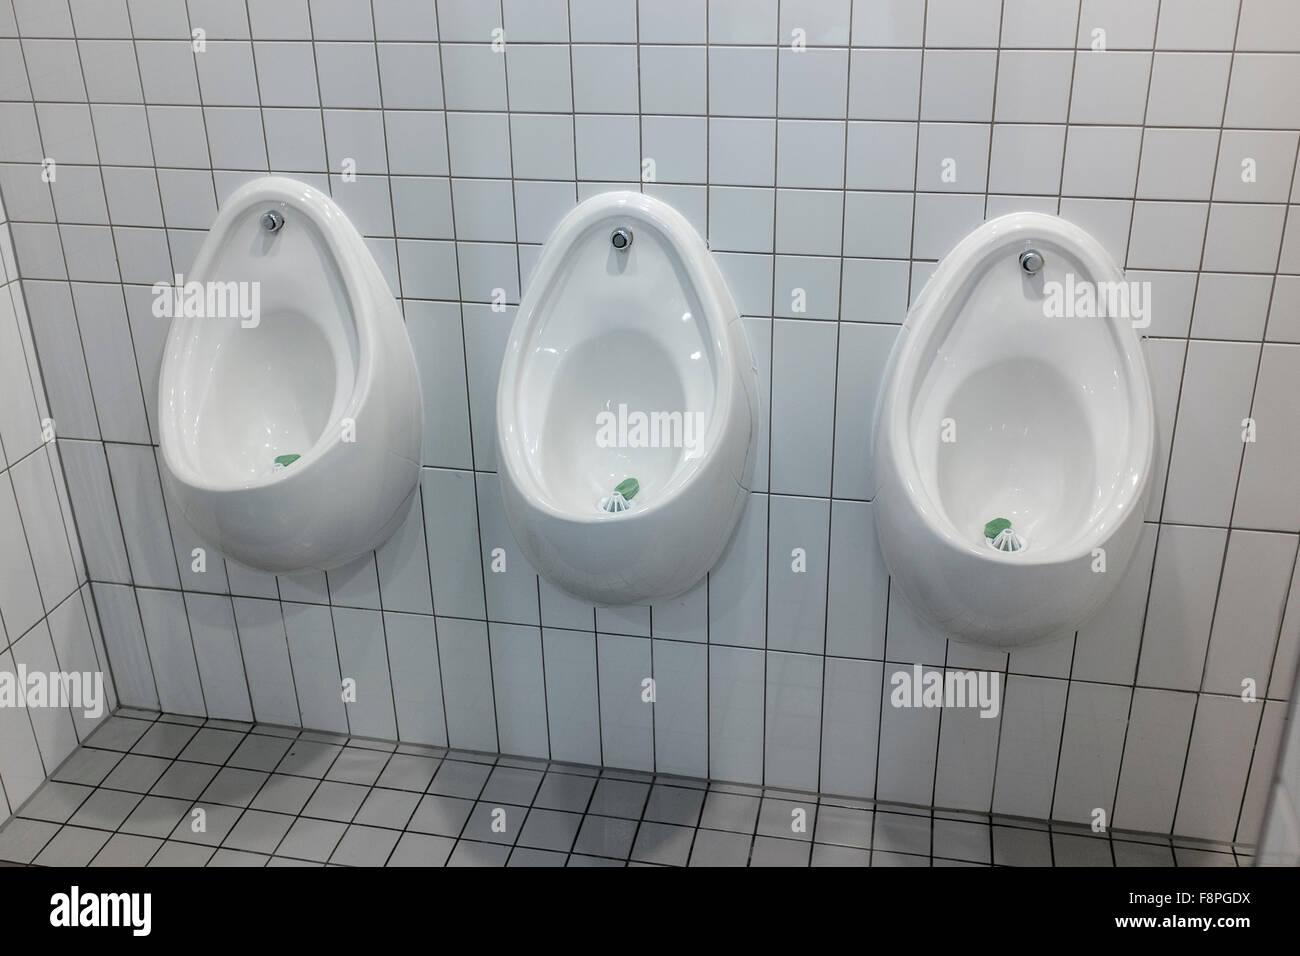 Urinals in public toilet Stock Photo